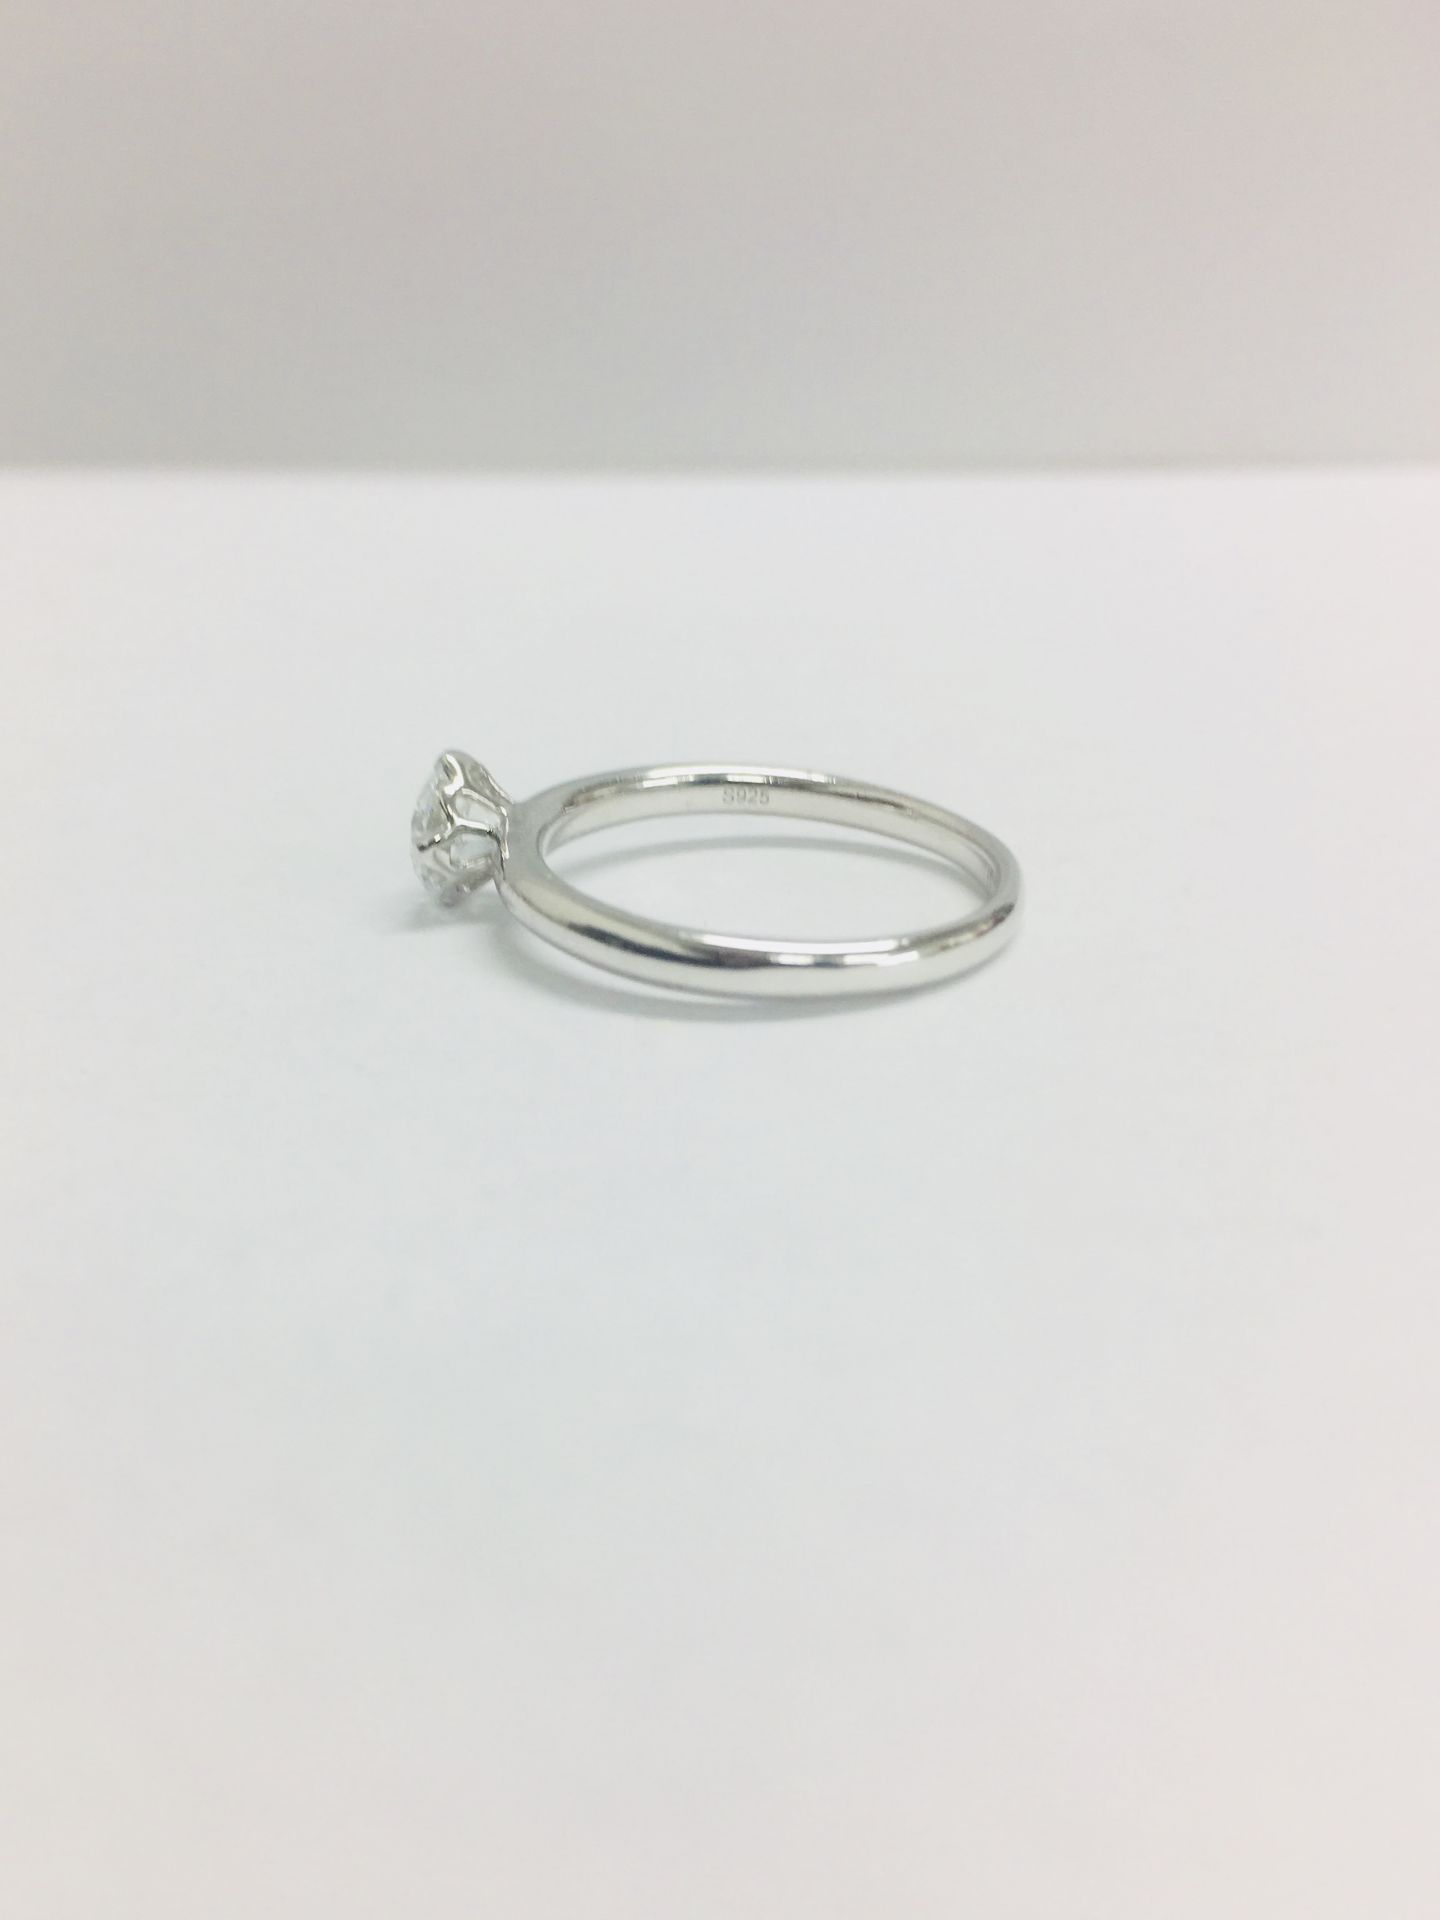 Platinum diamond solitaire ring,0.50ct brillliant cut diamond h colour vs clarity(clarity enhanced), - Image 4 of 6